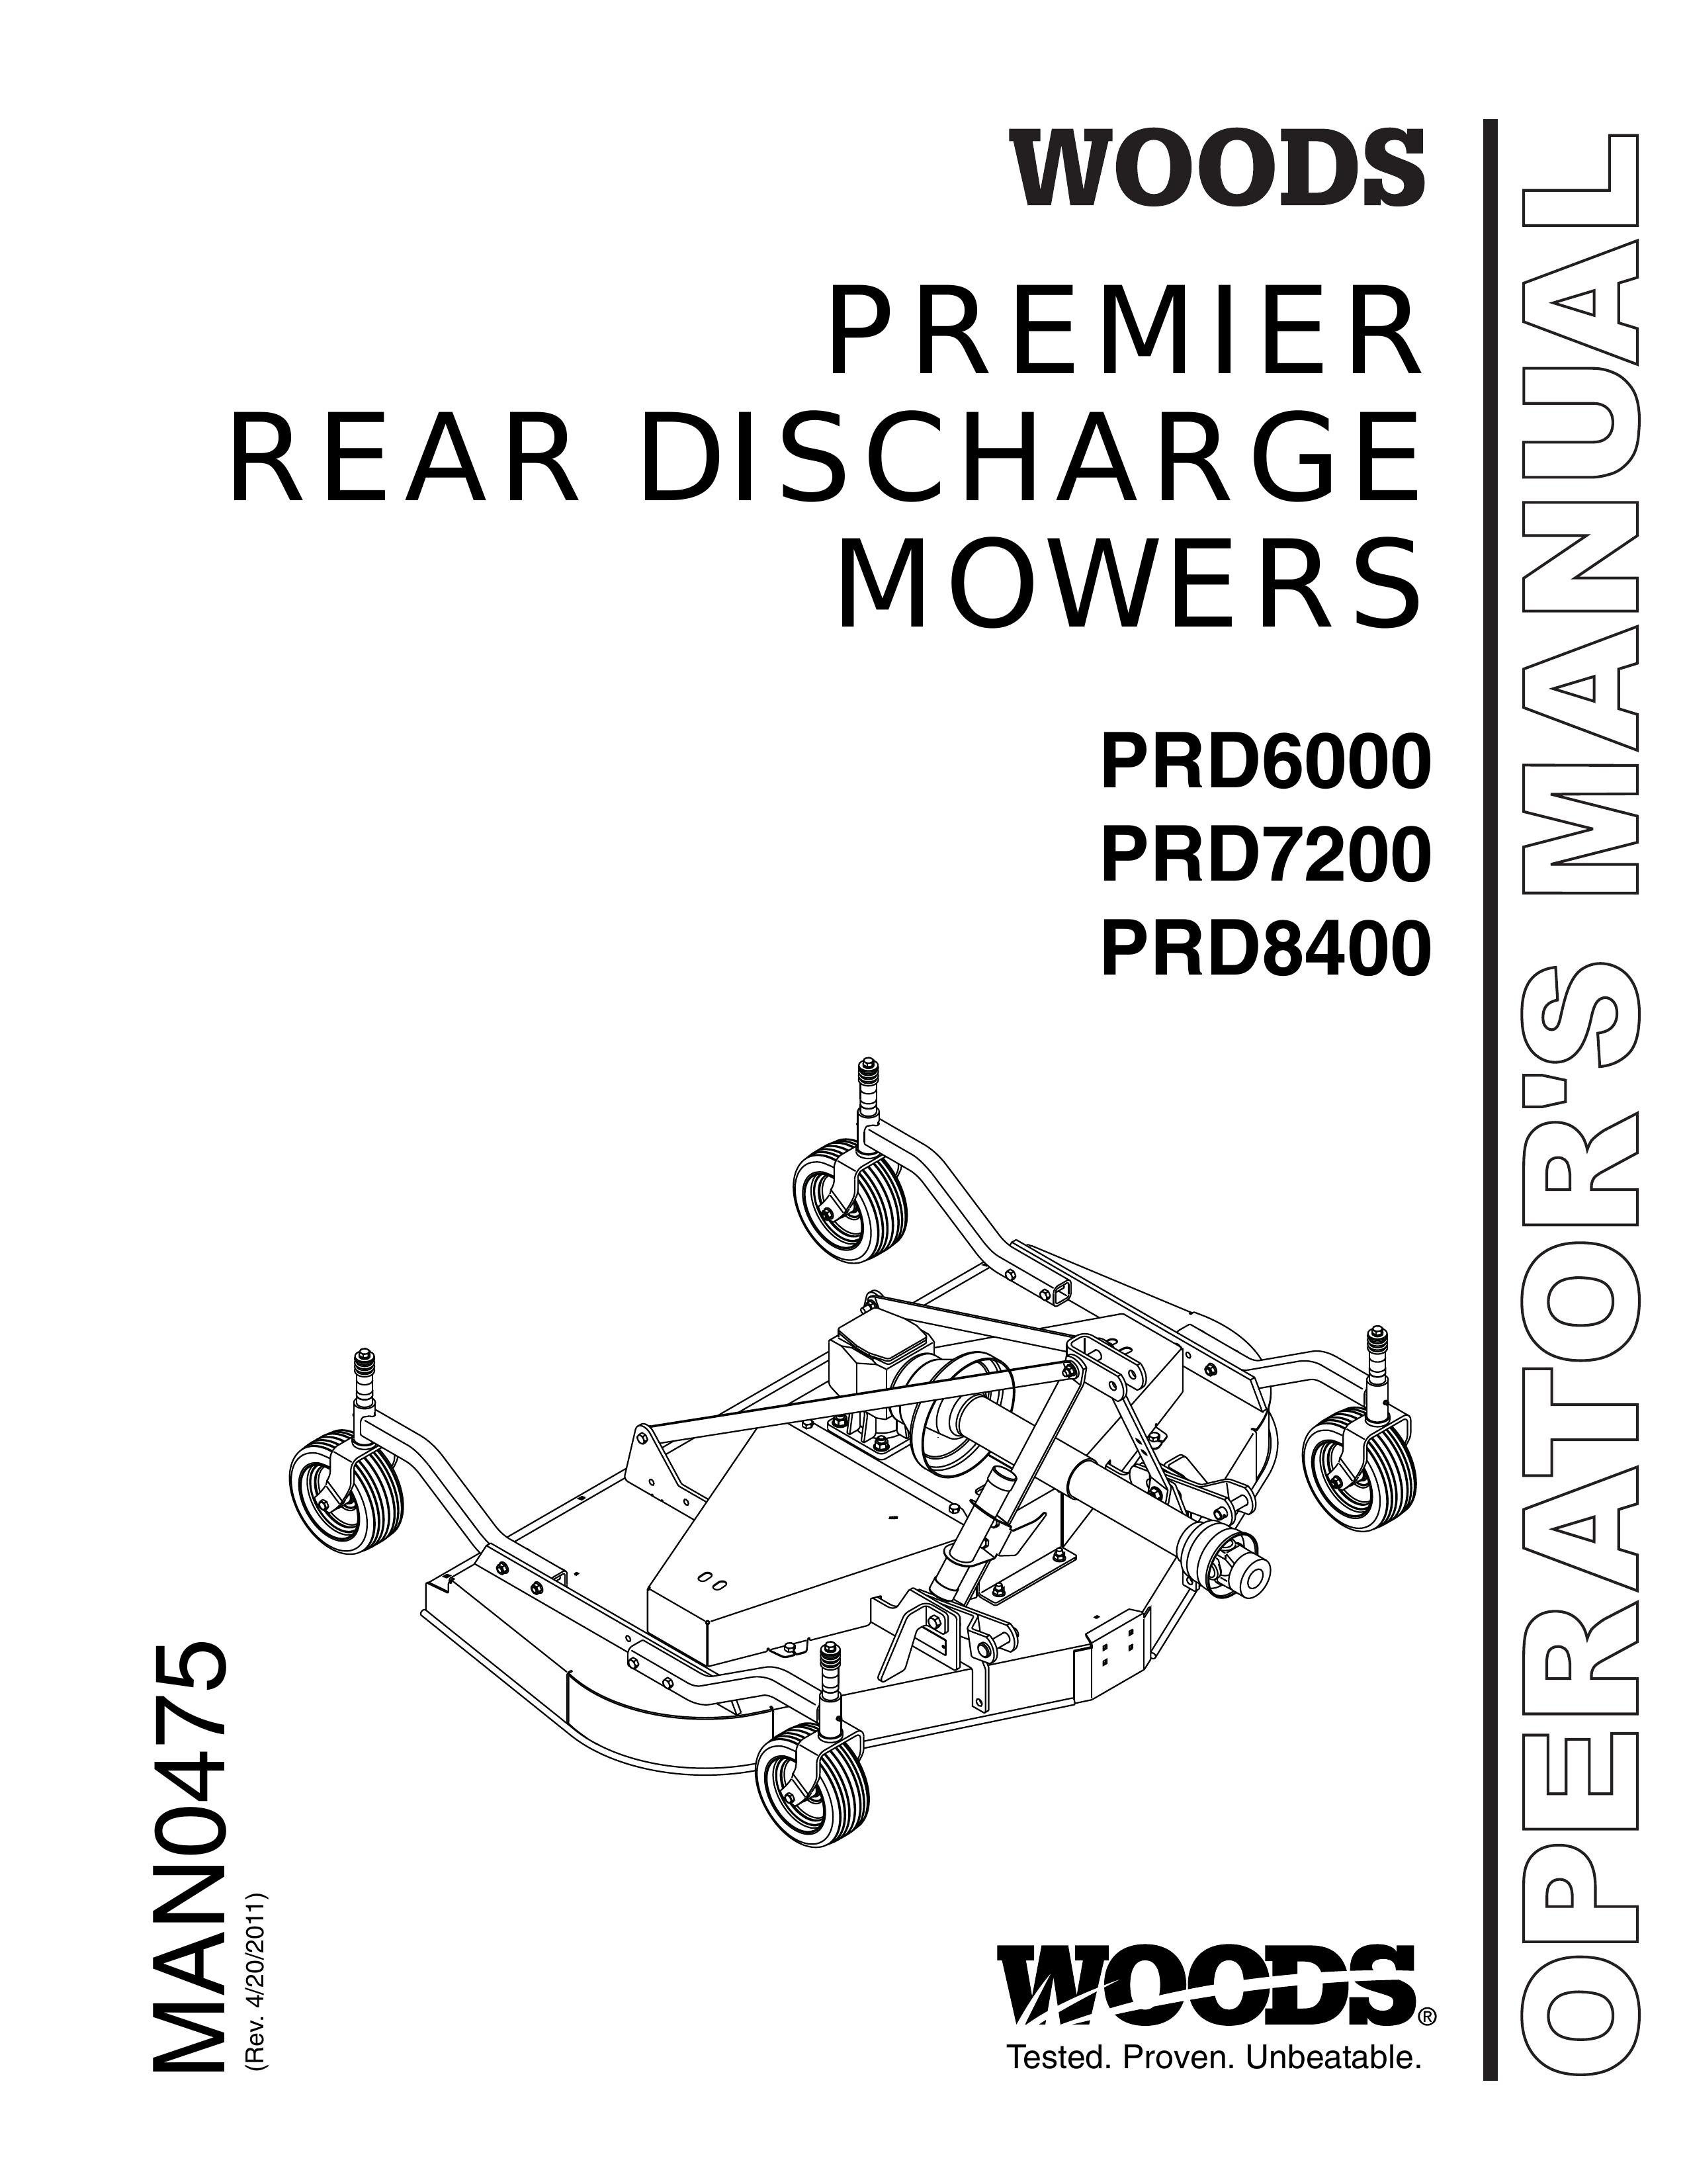 Woods Equipment PRD7200 Lawn Mower User Manual